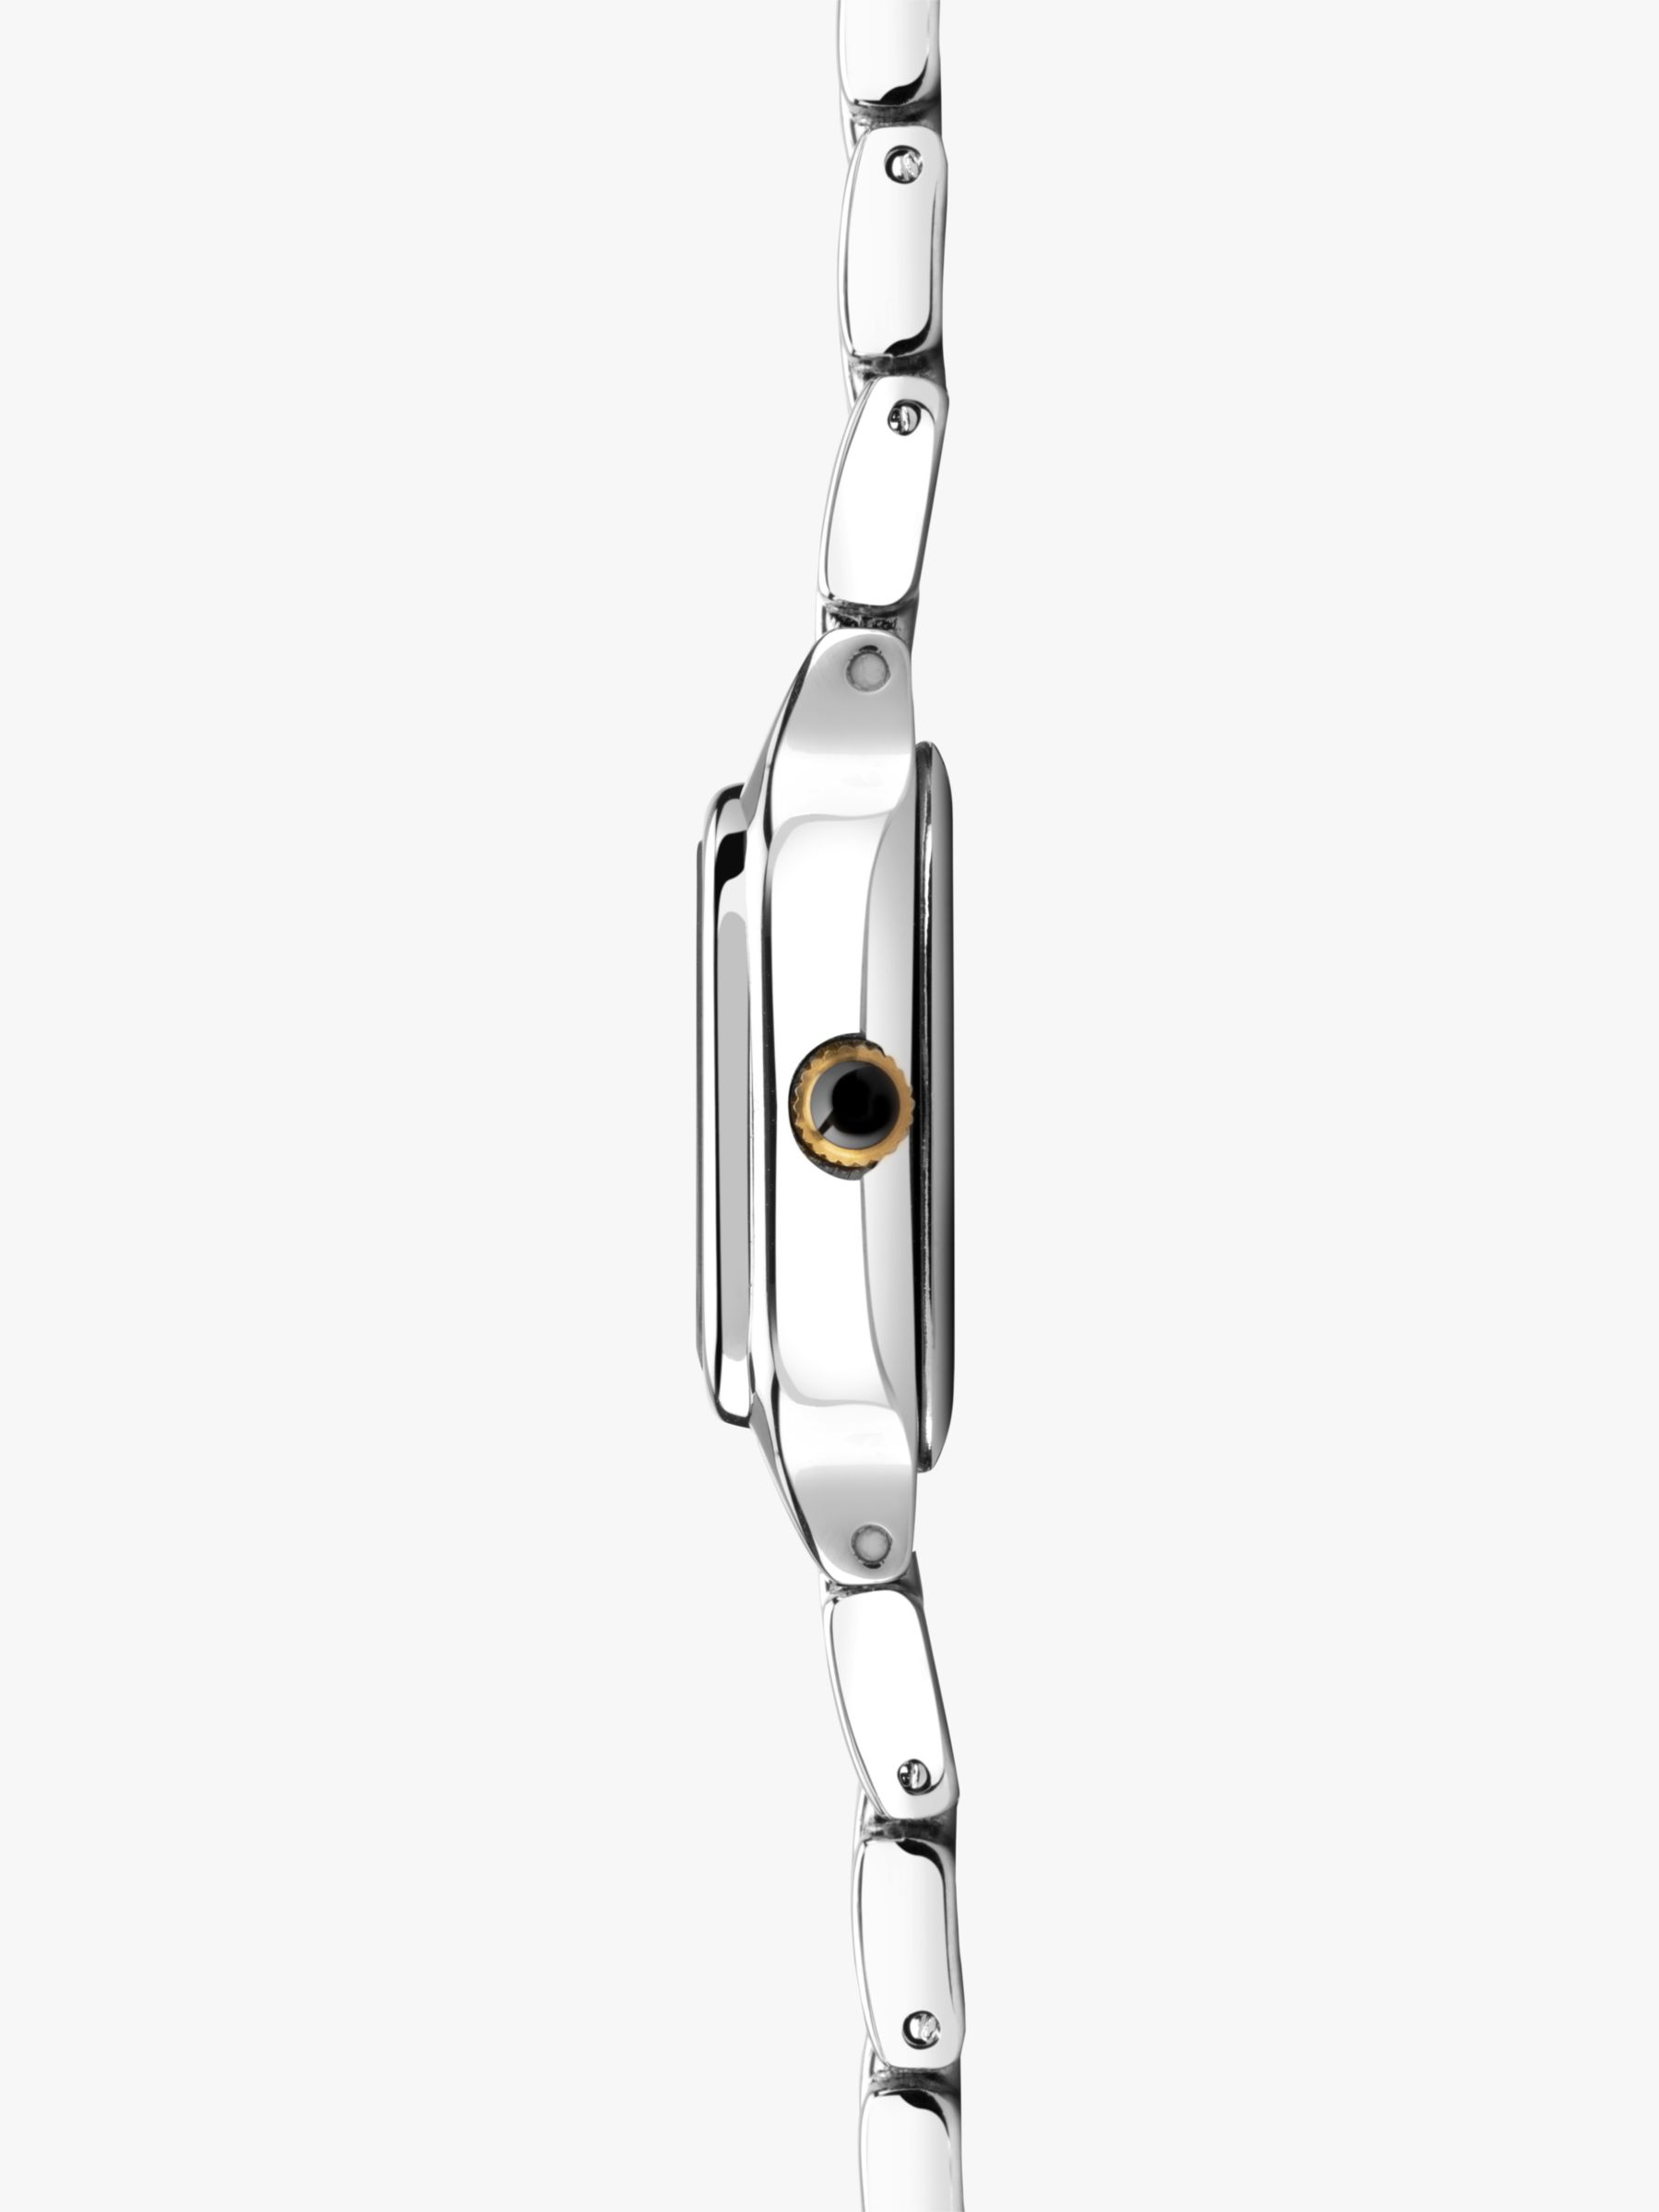 Octagonal Shaped Metal Bracelet Watch Gold